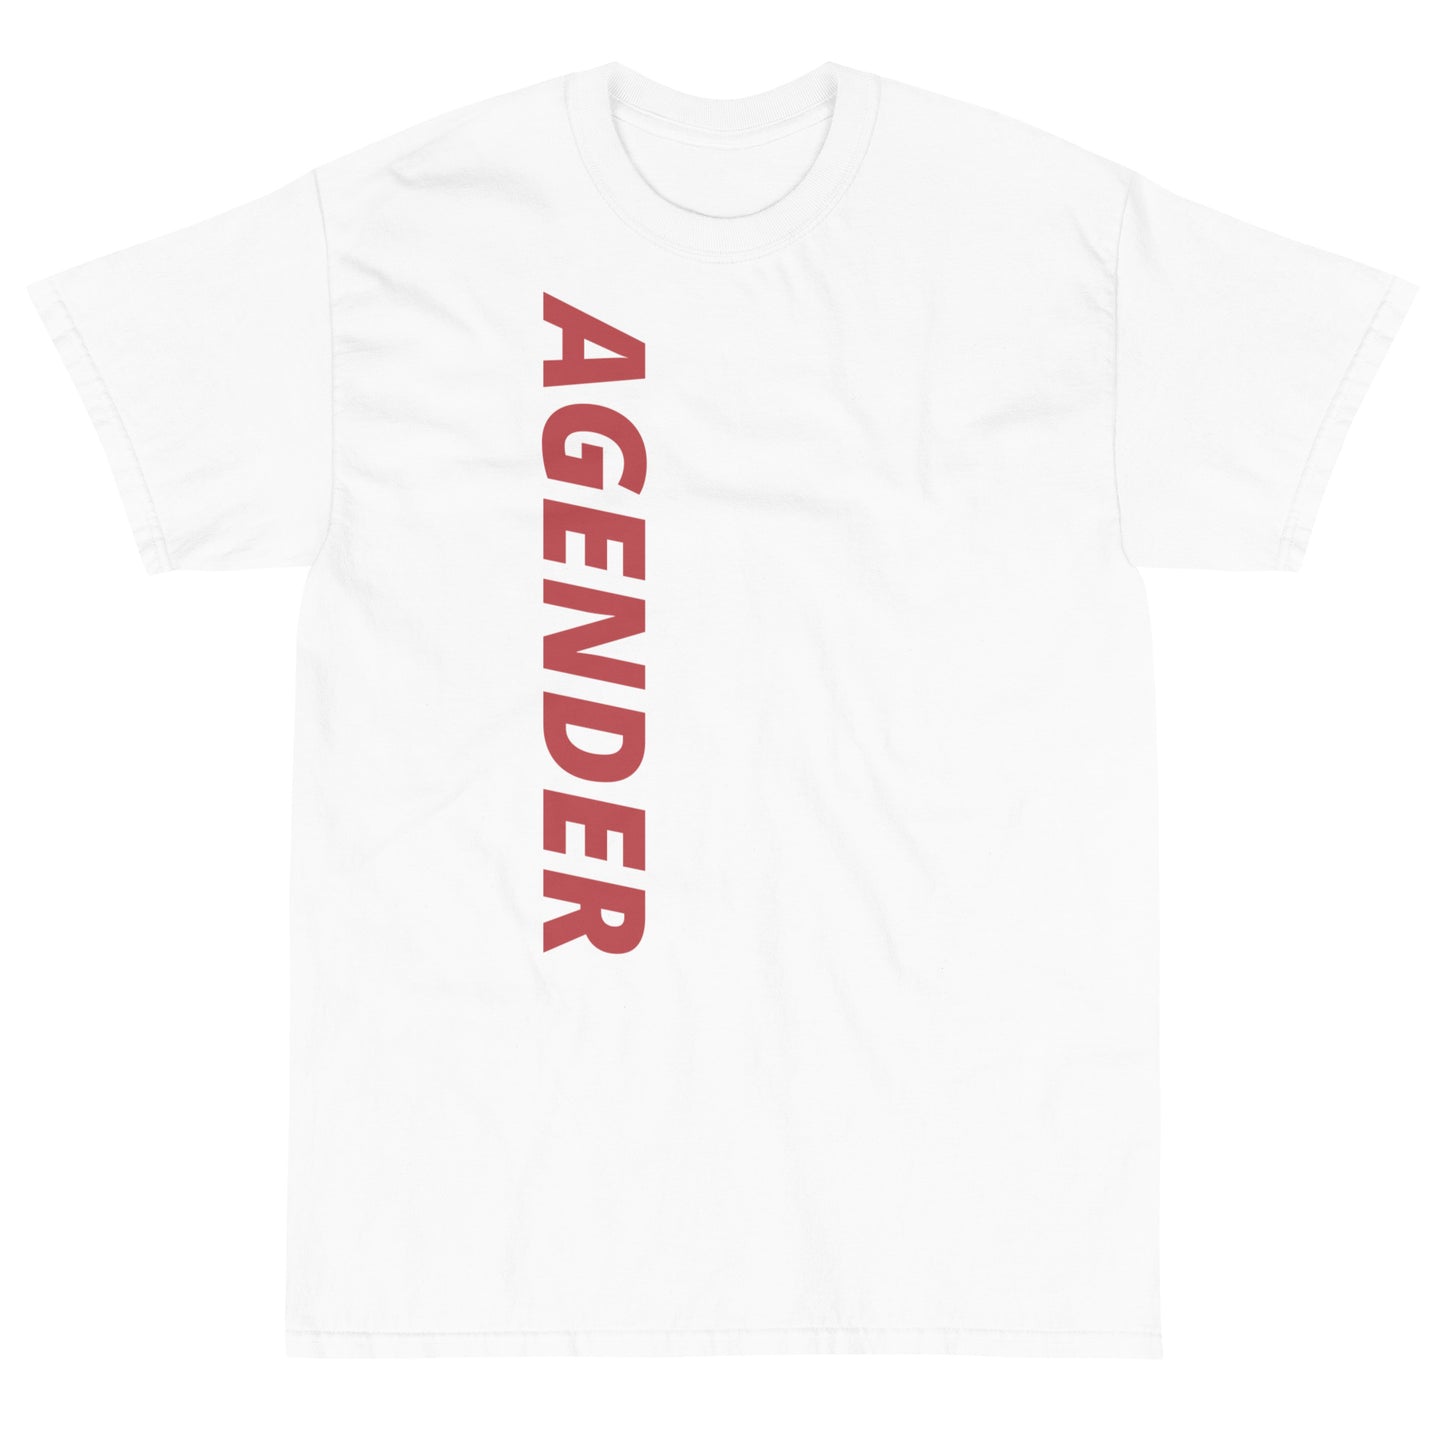 "Agender" Short Sleeve T-Shirt